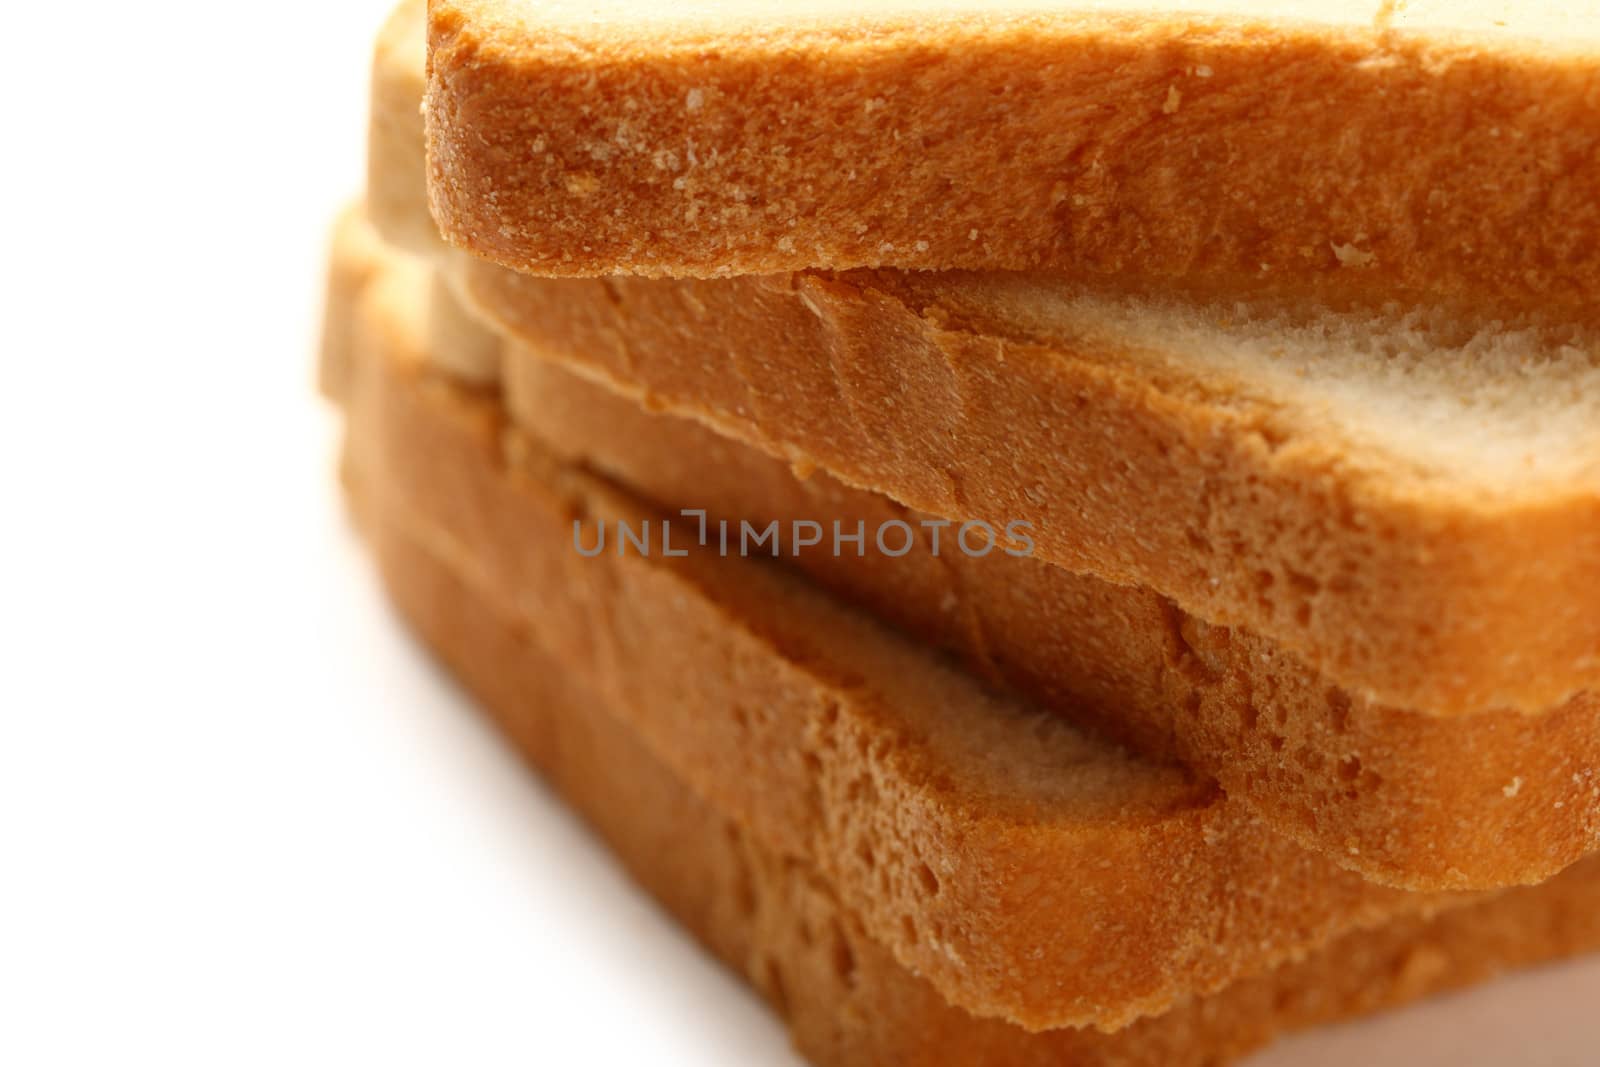 Bread slices on white background by Garsya